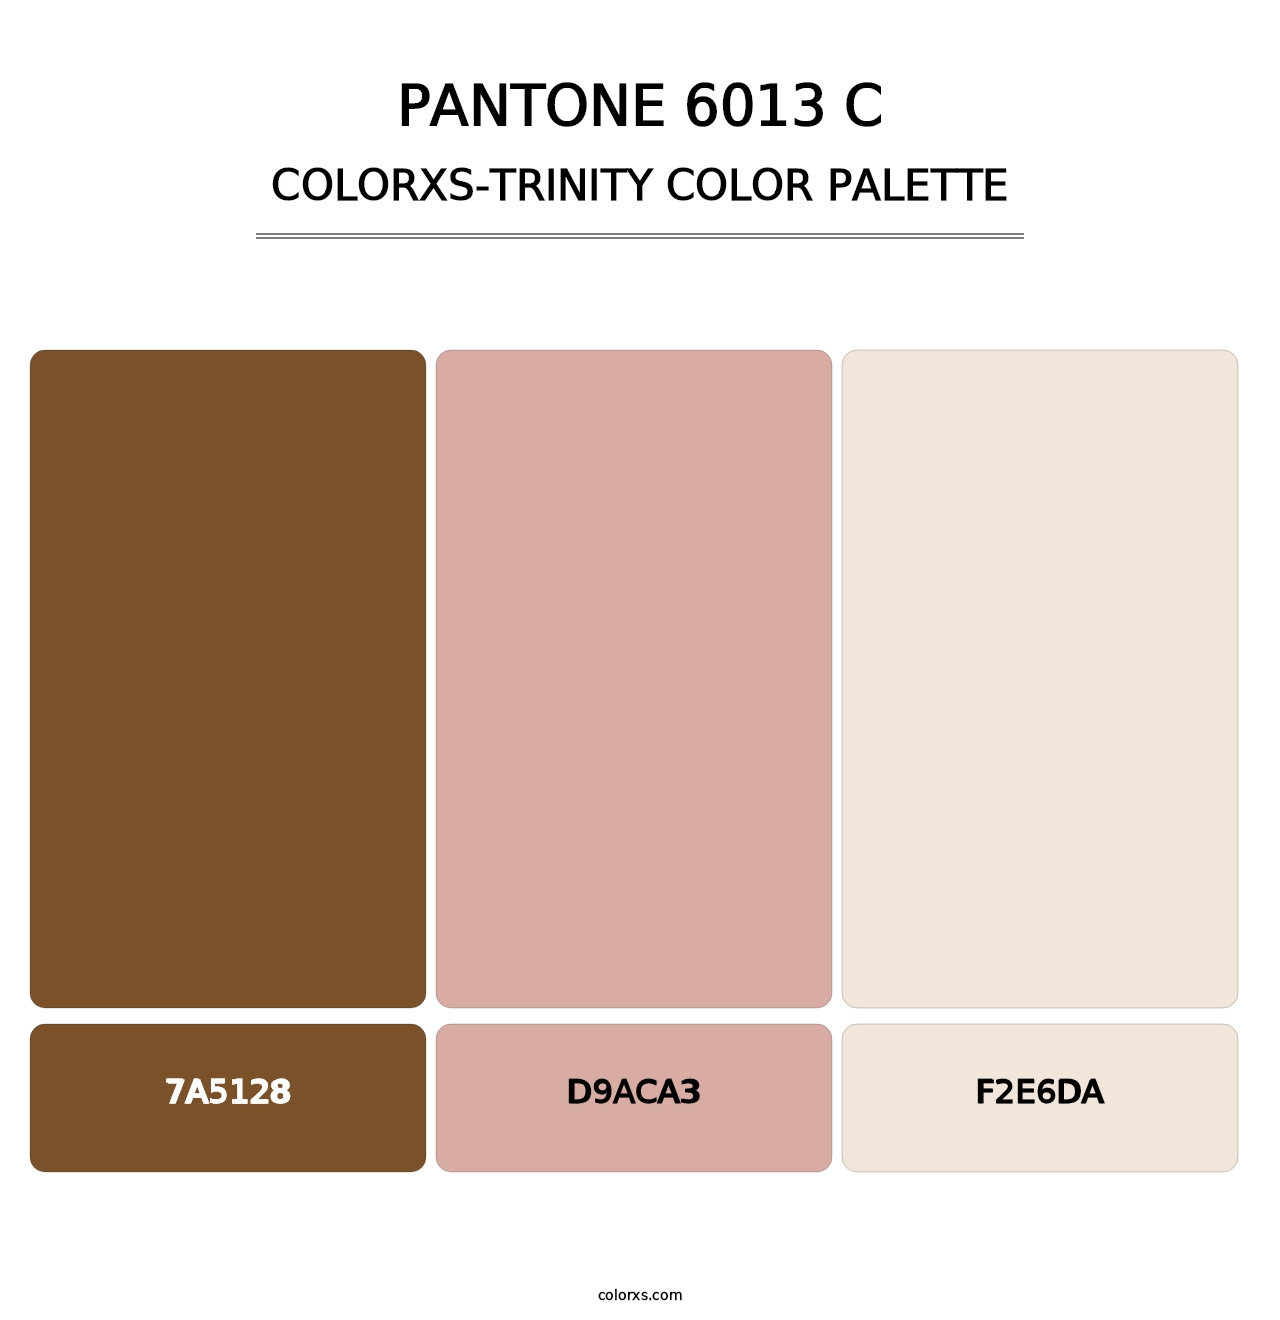 PANTONE 6013 C - Colorxs Trinity Palette